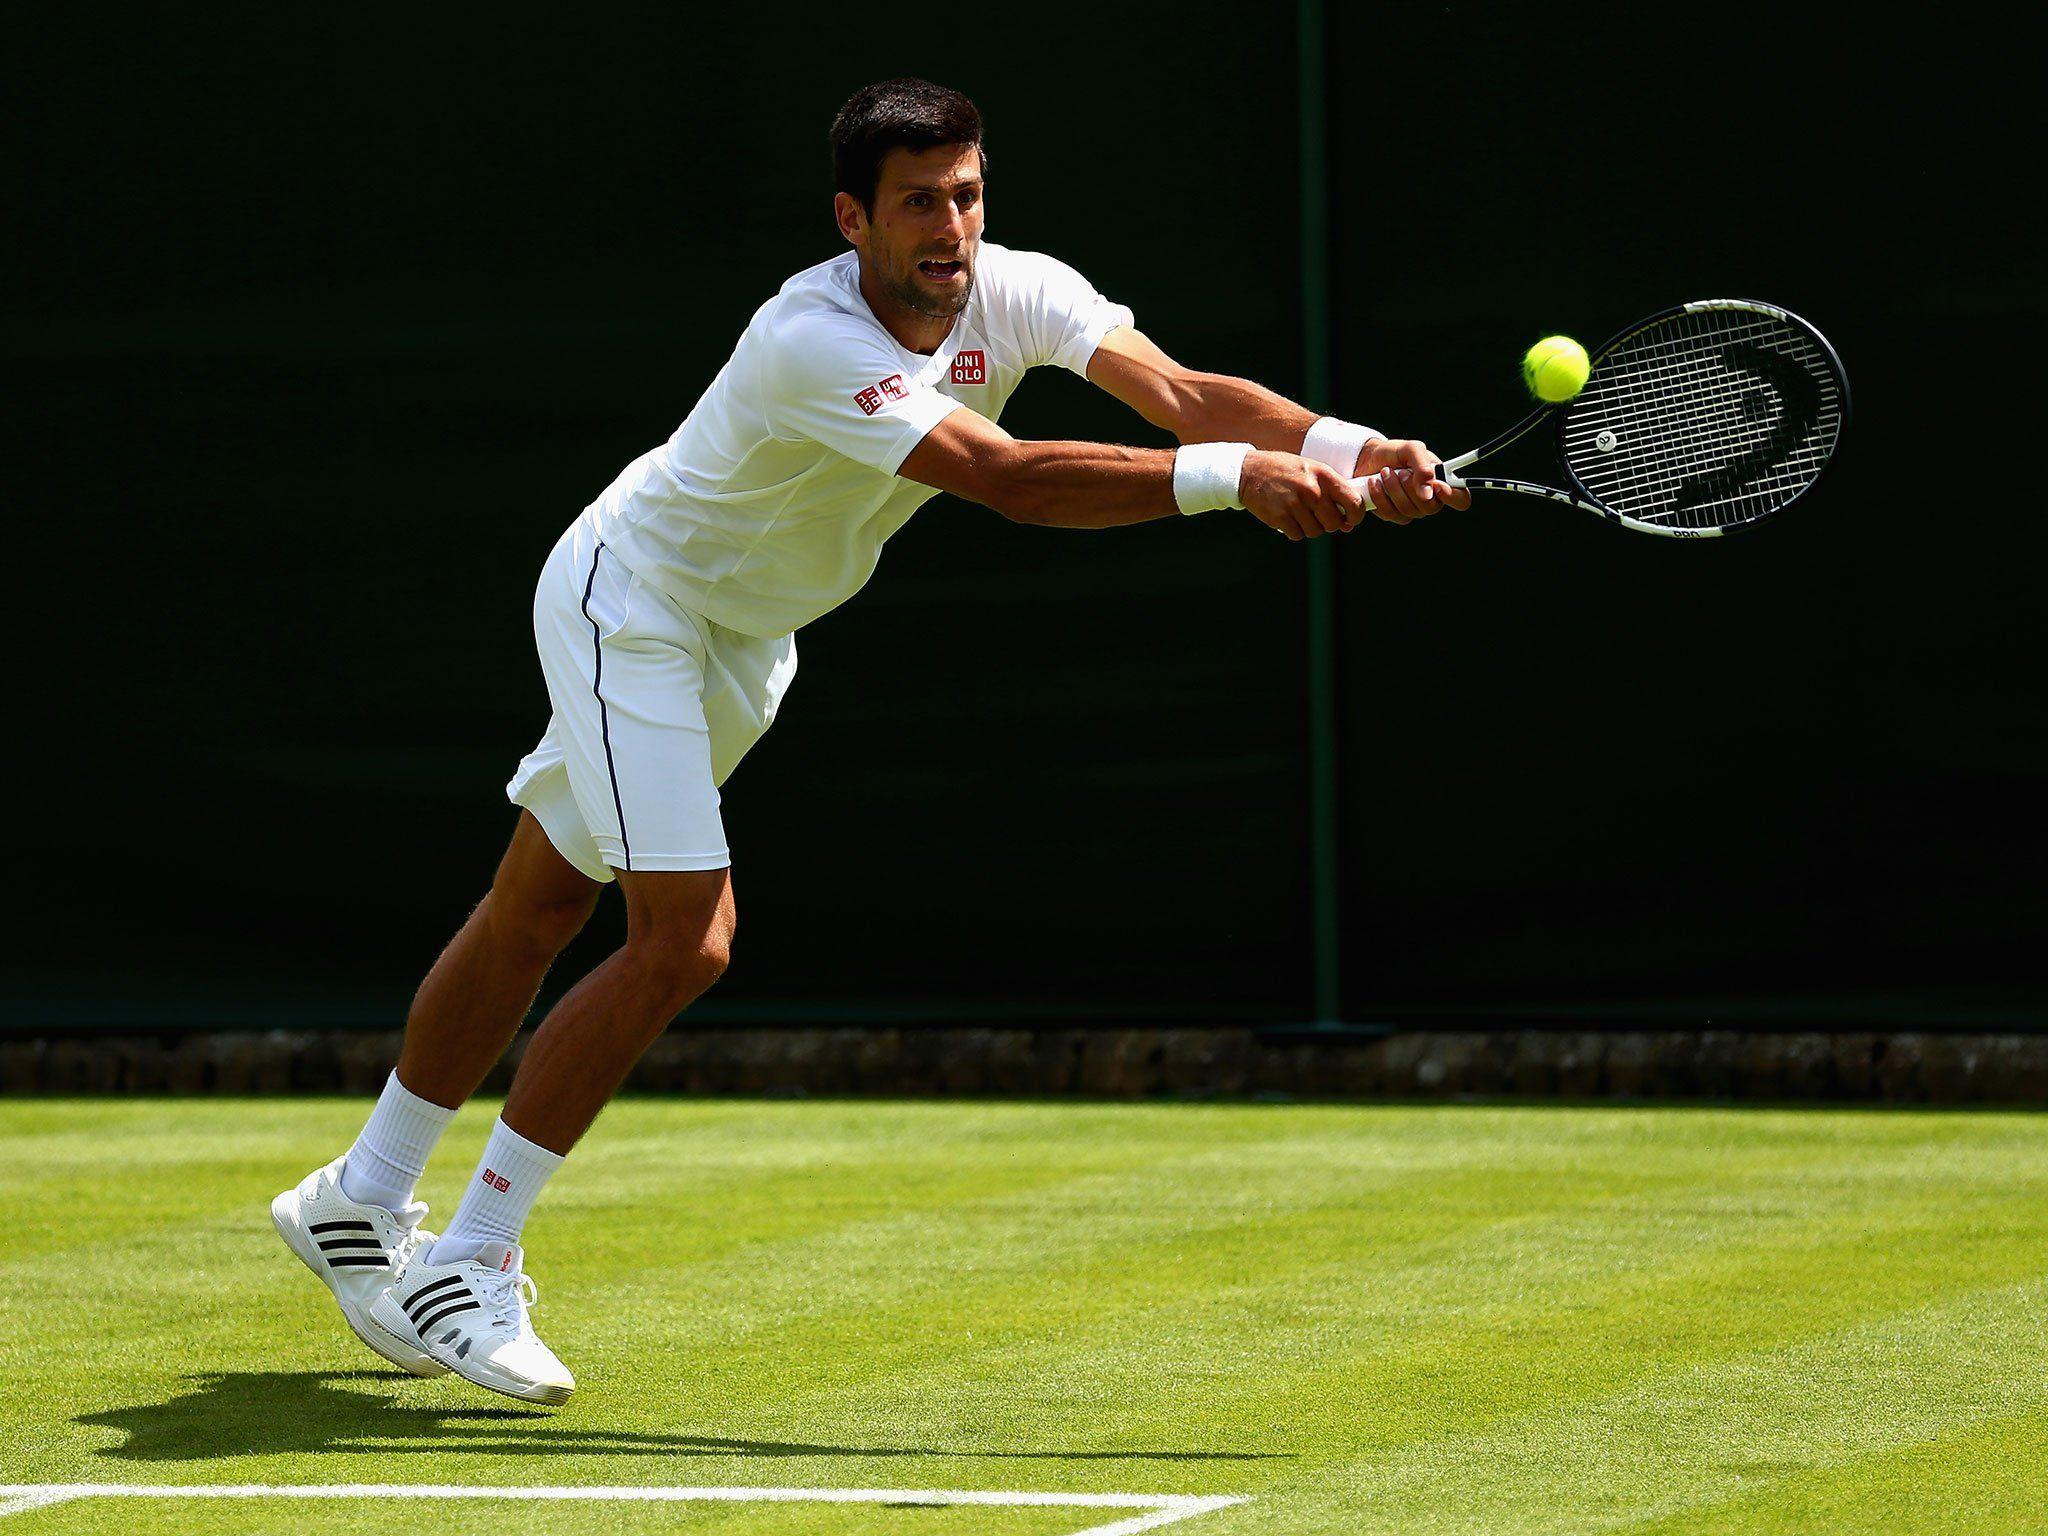 Wimbledon 2015 order of play: Novak Djokovic vs Philipp